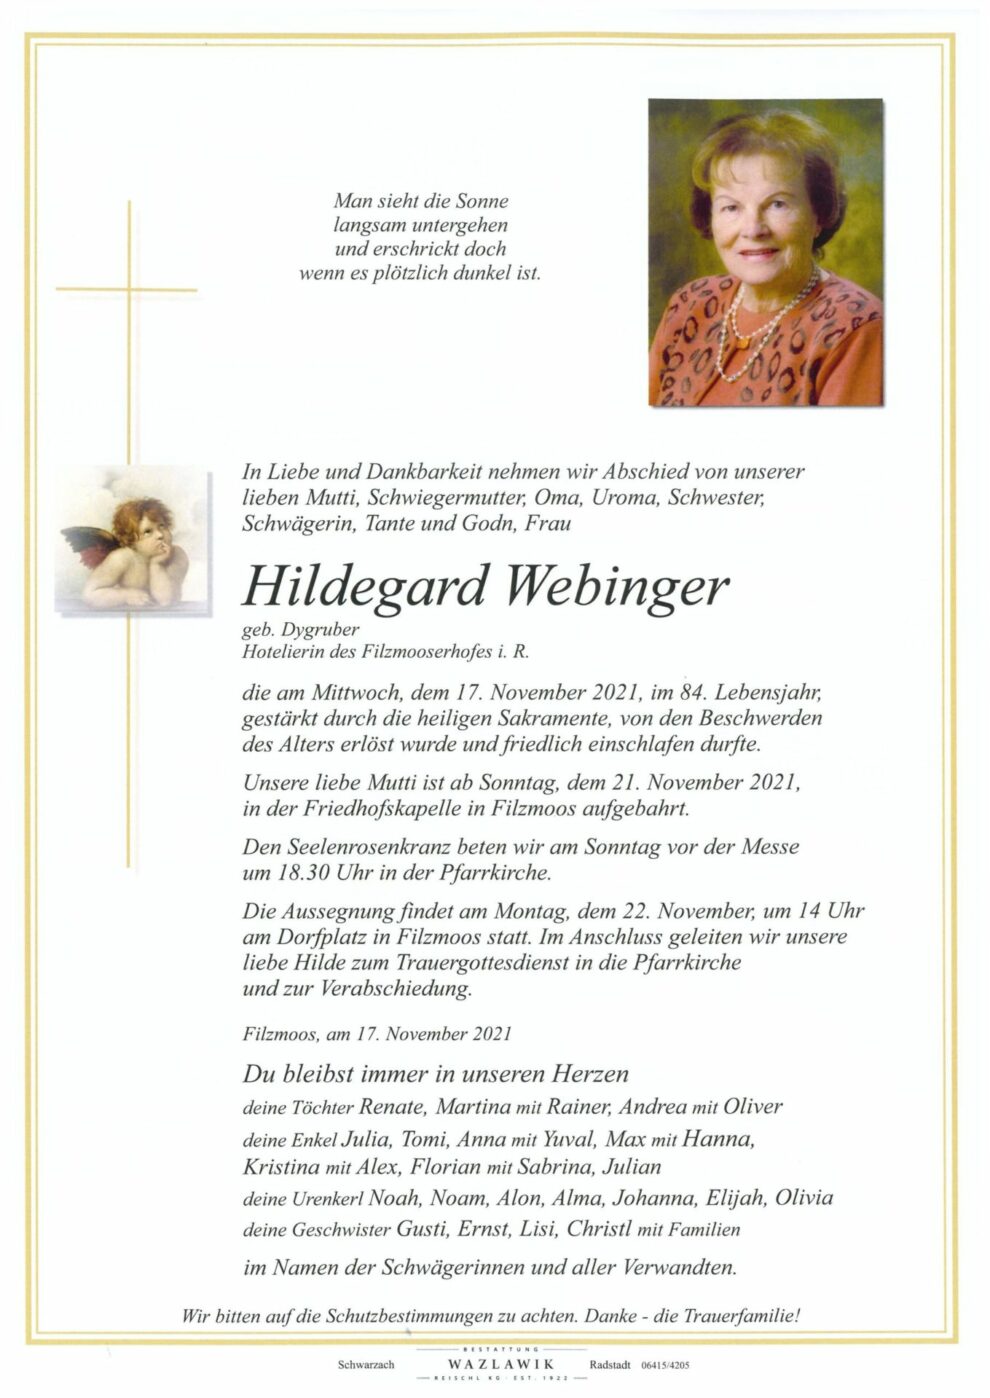 Hildegard Webingher